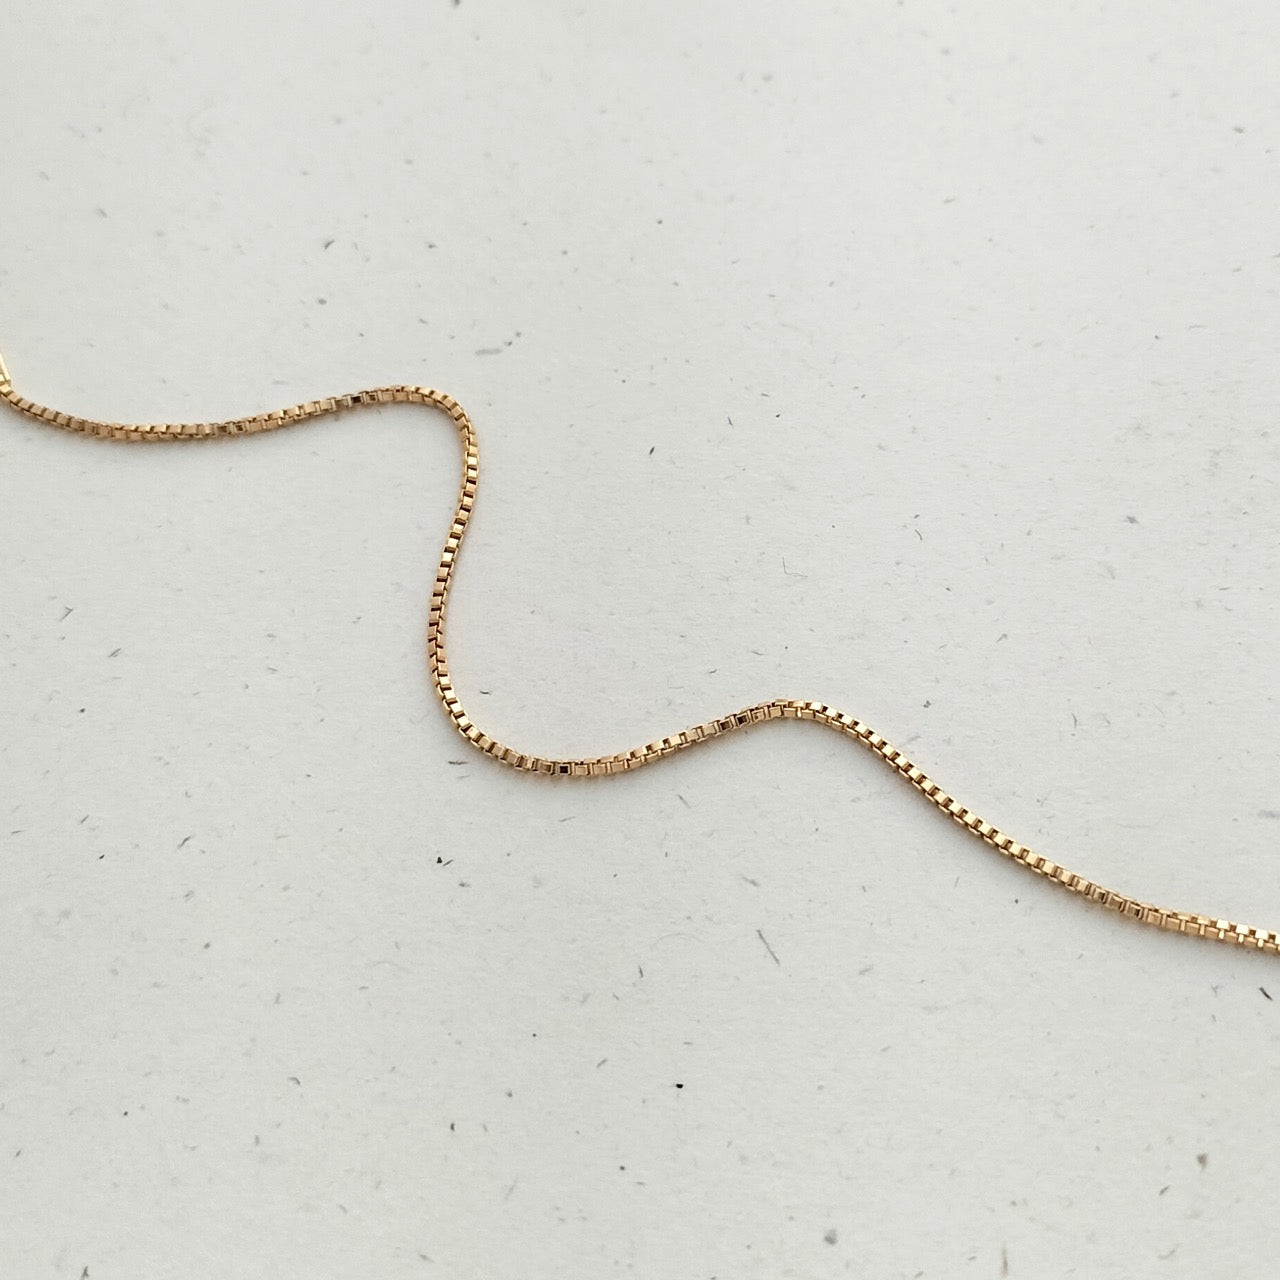 Thin gold box chain bracelet